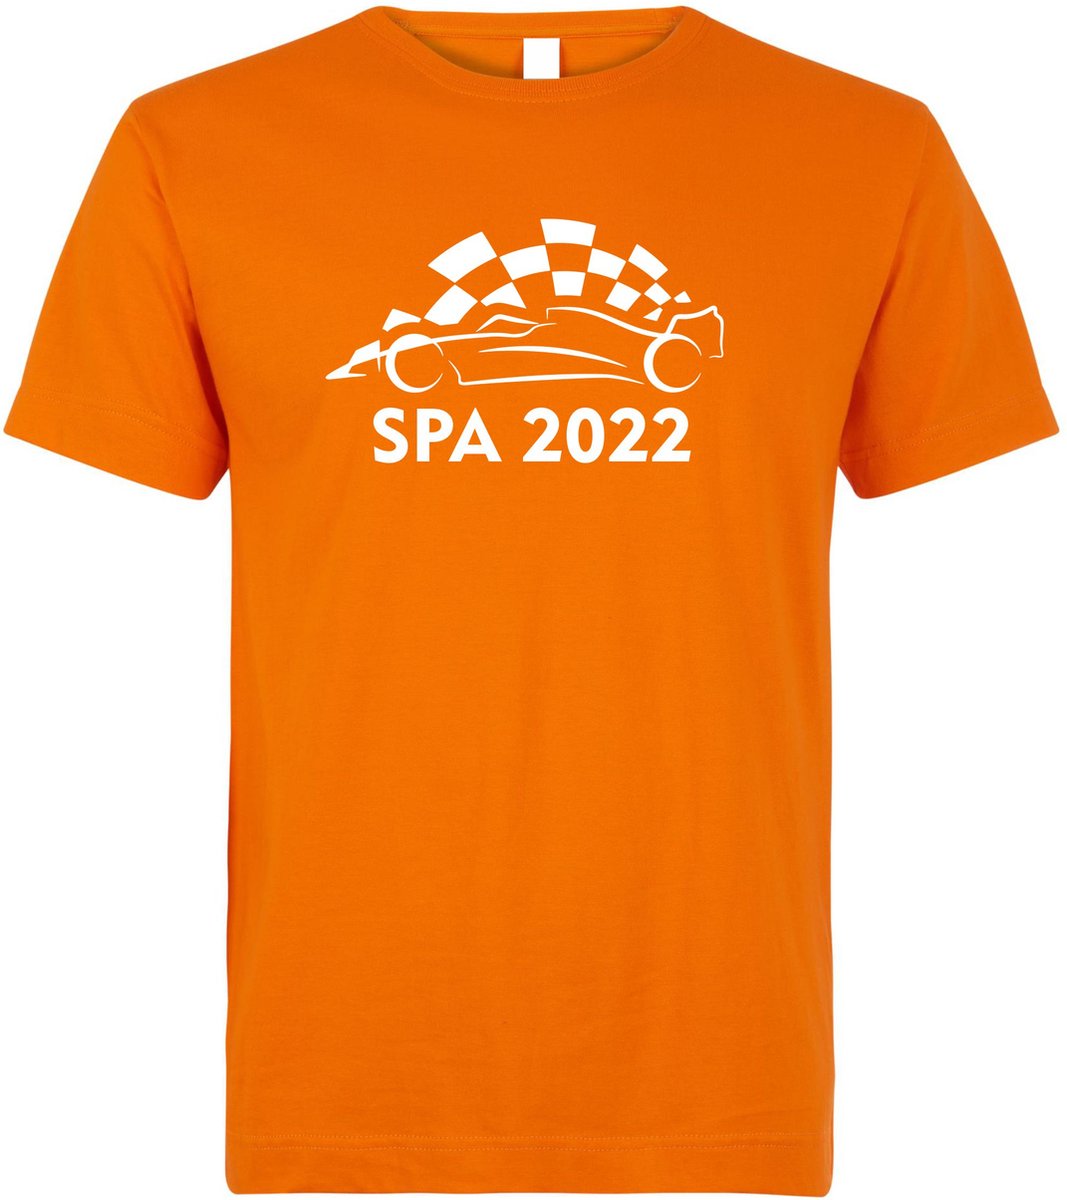 T-shirt kinderen Spa 2022 met raceauto | Max Verstappen / Red Bull Racing / Formule 1 fan | Grand Prix Circuit Spa-Francorchamps | kleding shirt | Oranje | maat 68